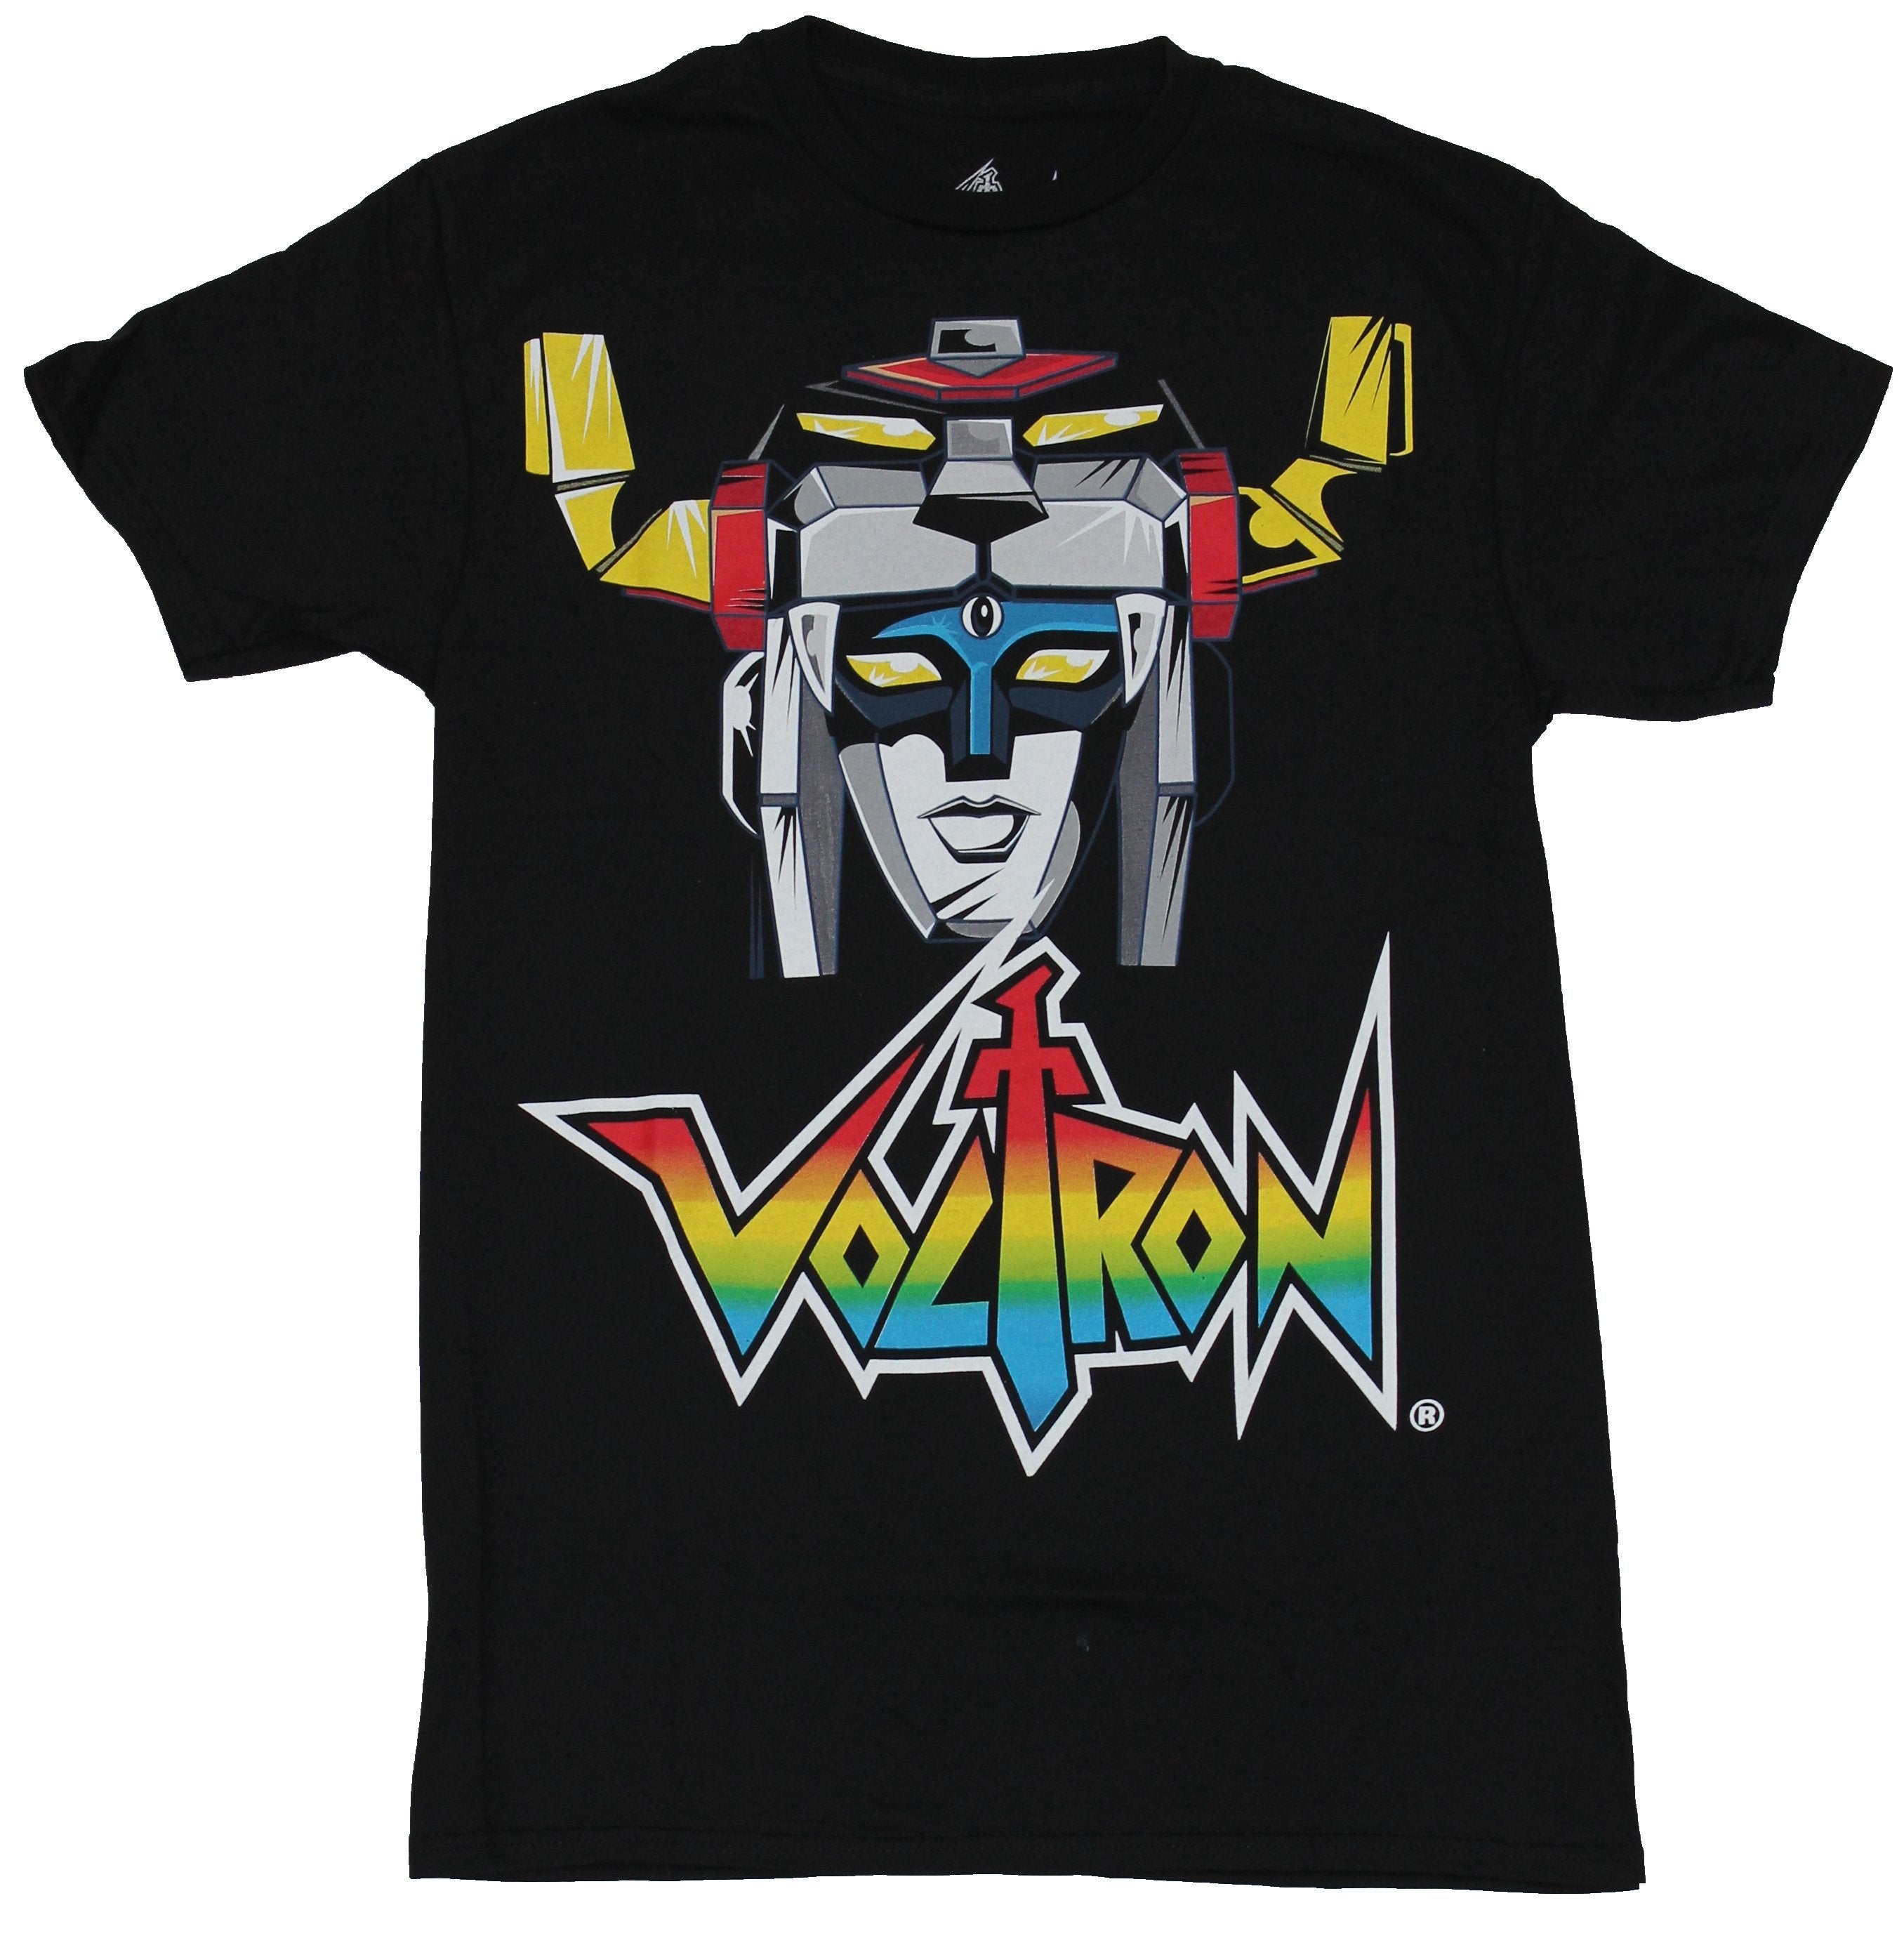 Voltron Mens T-Shirt - Classic Cartoon Head Over Colorful Logo Image